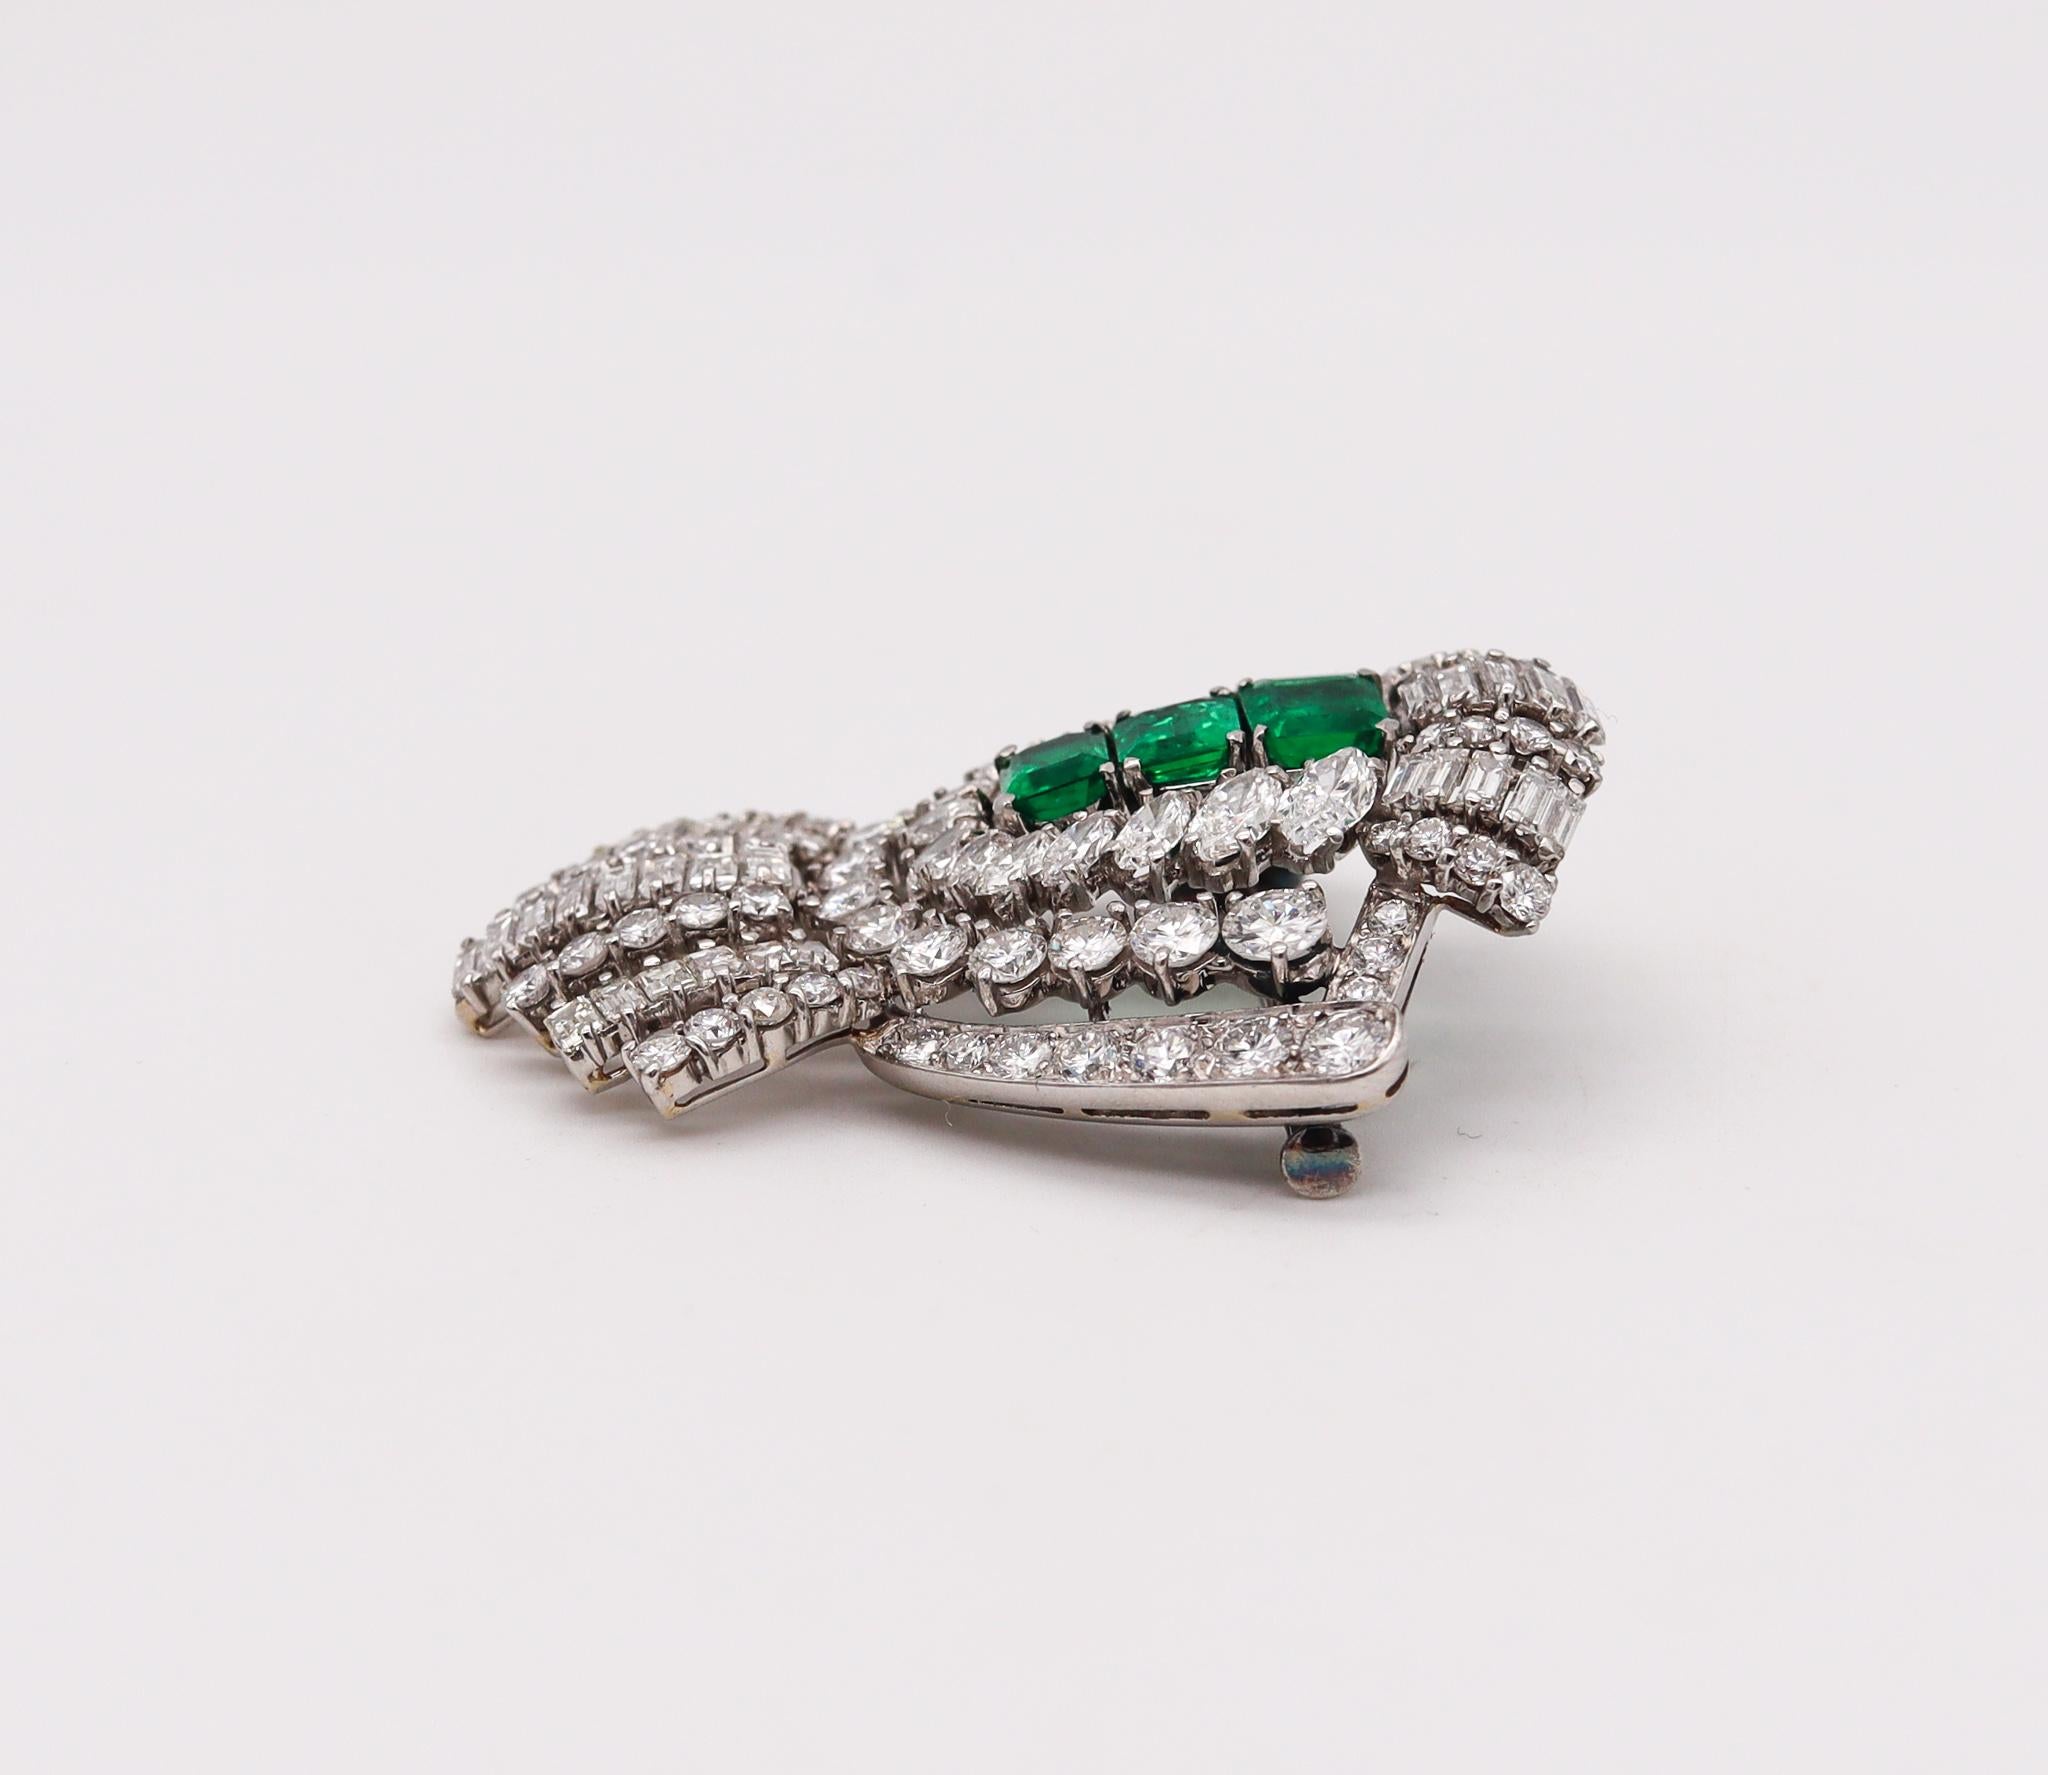 Mixed Cut Art Deco 1930 Convertible Pendant Brooch Platinum 11.73 Ctw Diamonds & Emeralds For Sale